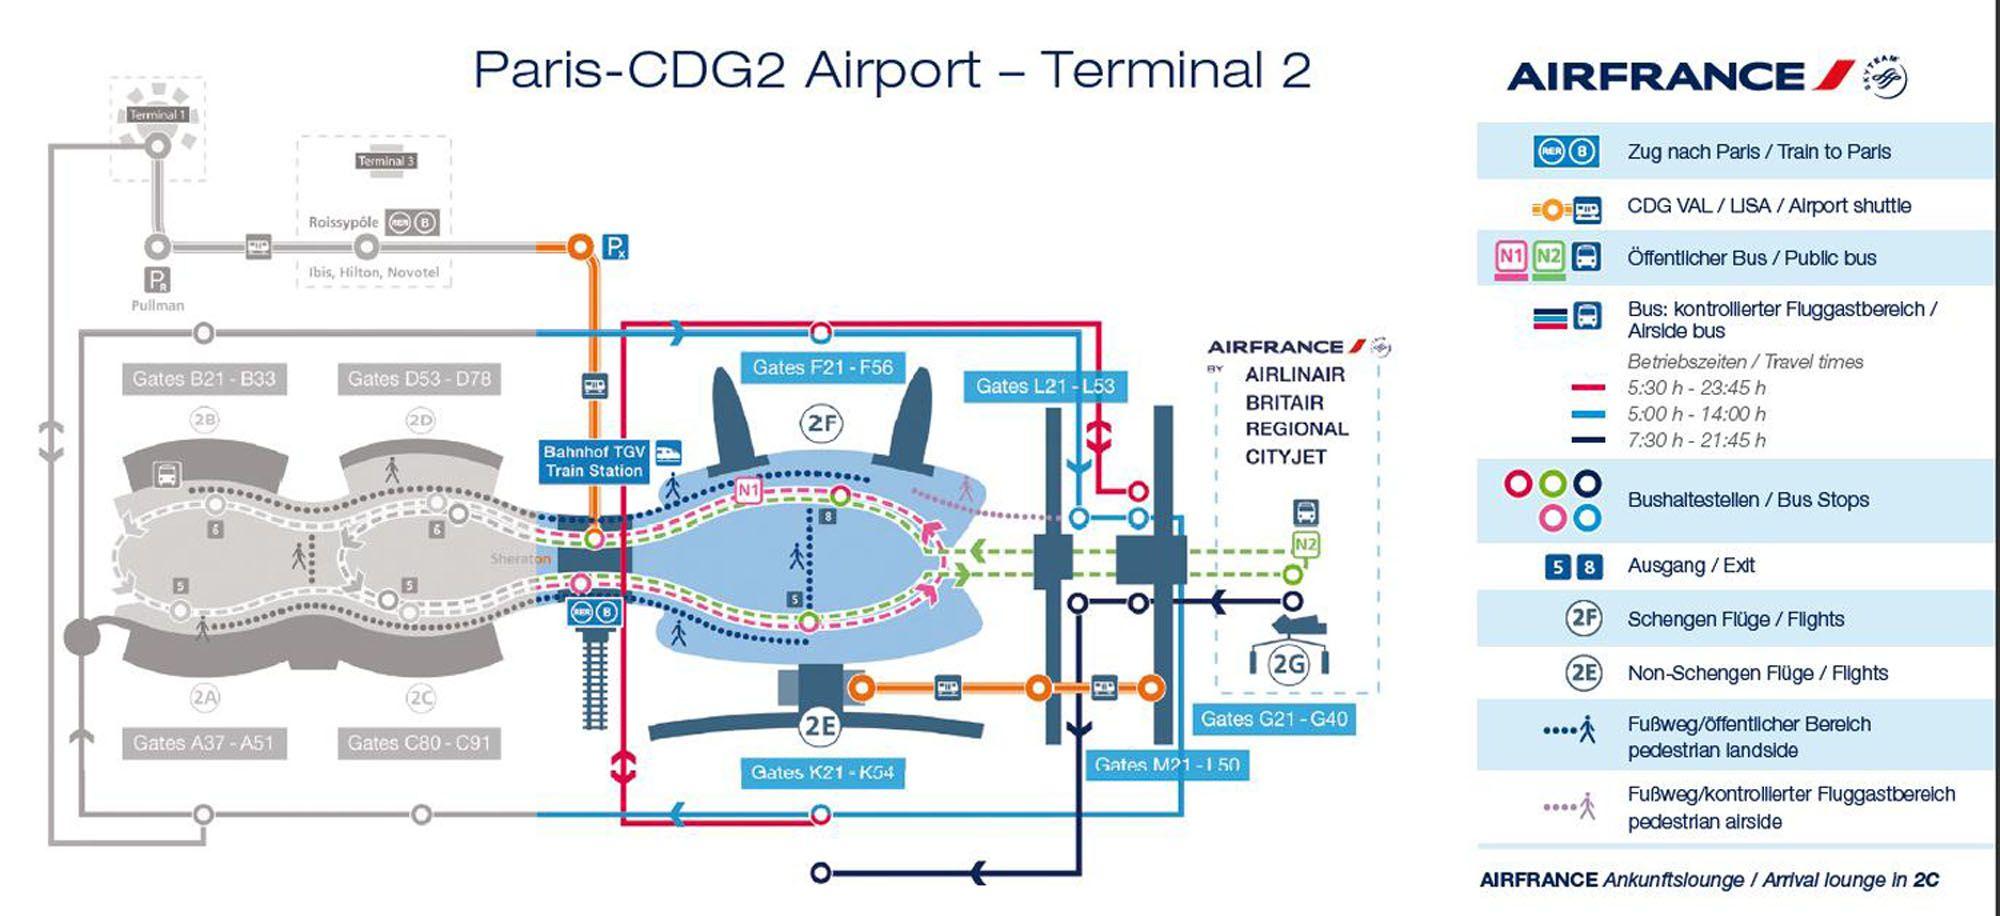 CDG Airport Terminal 2 to Paris - Paris by Train